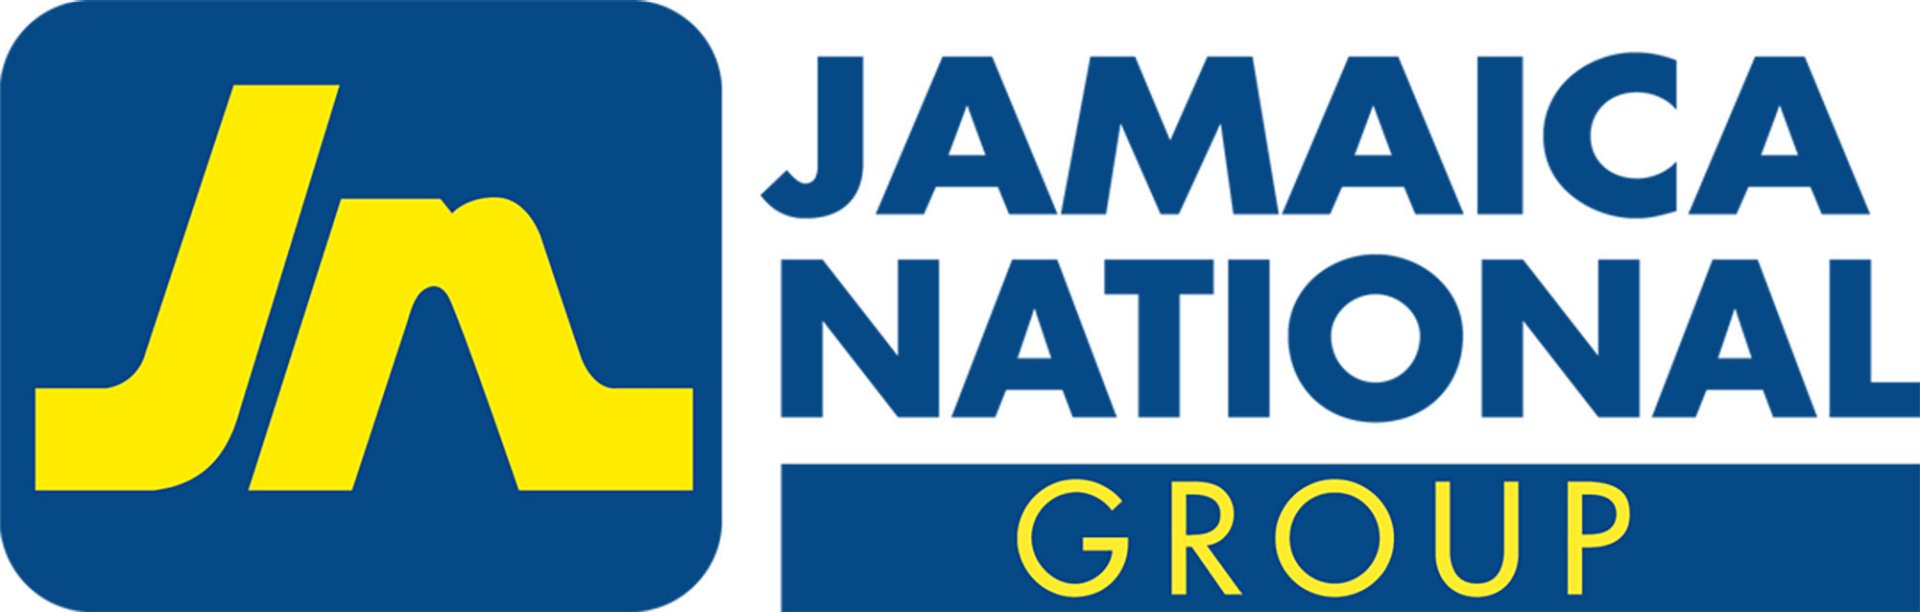 JN Jamaica